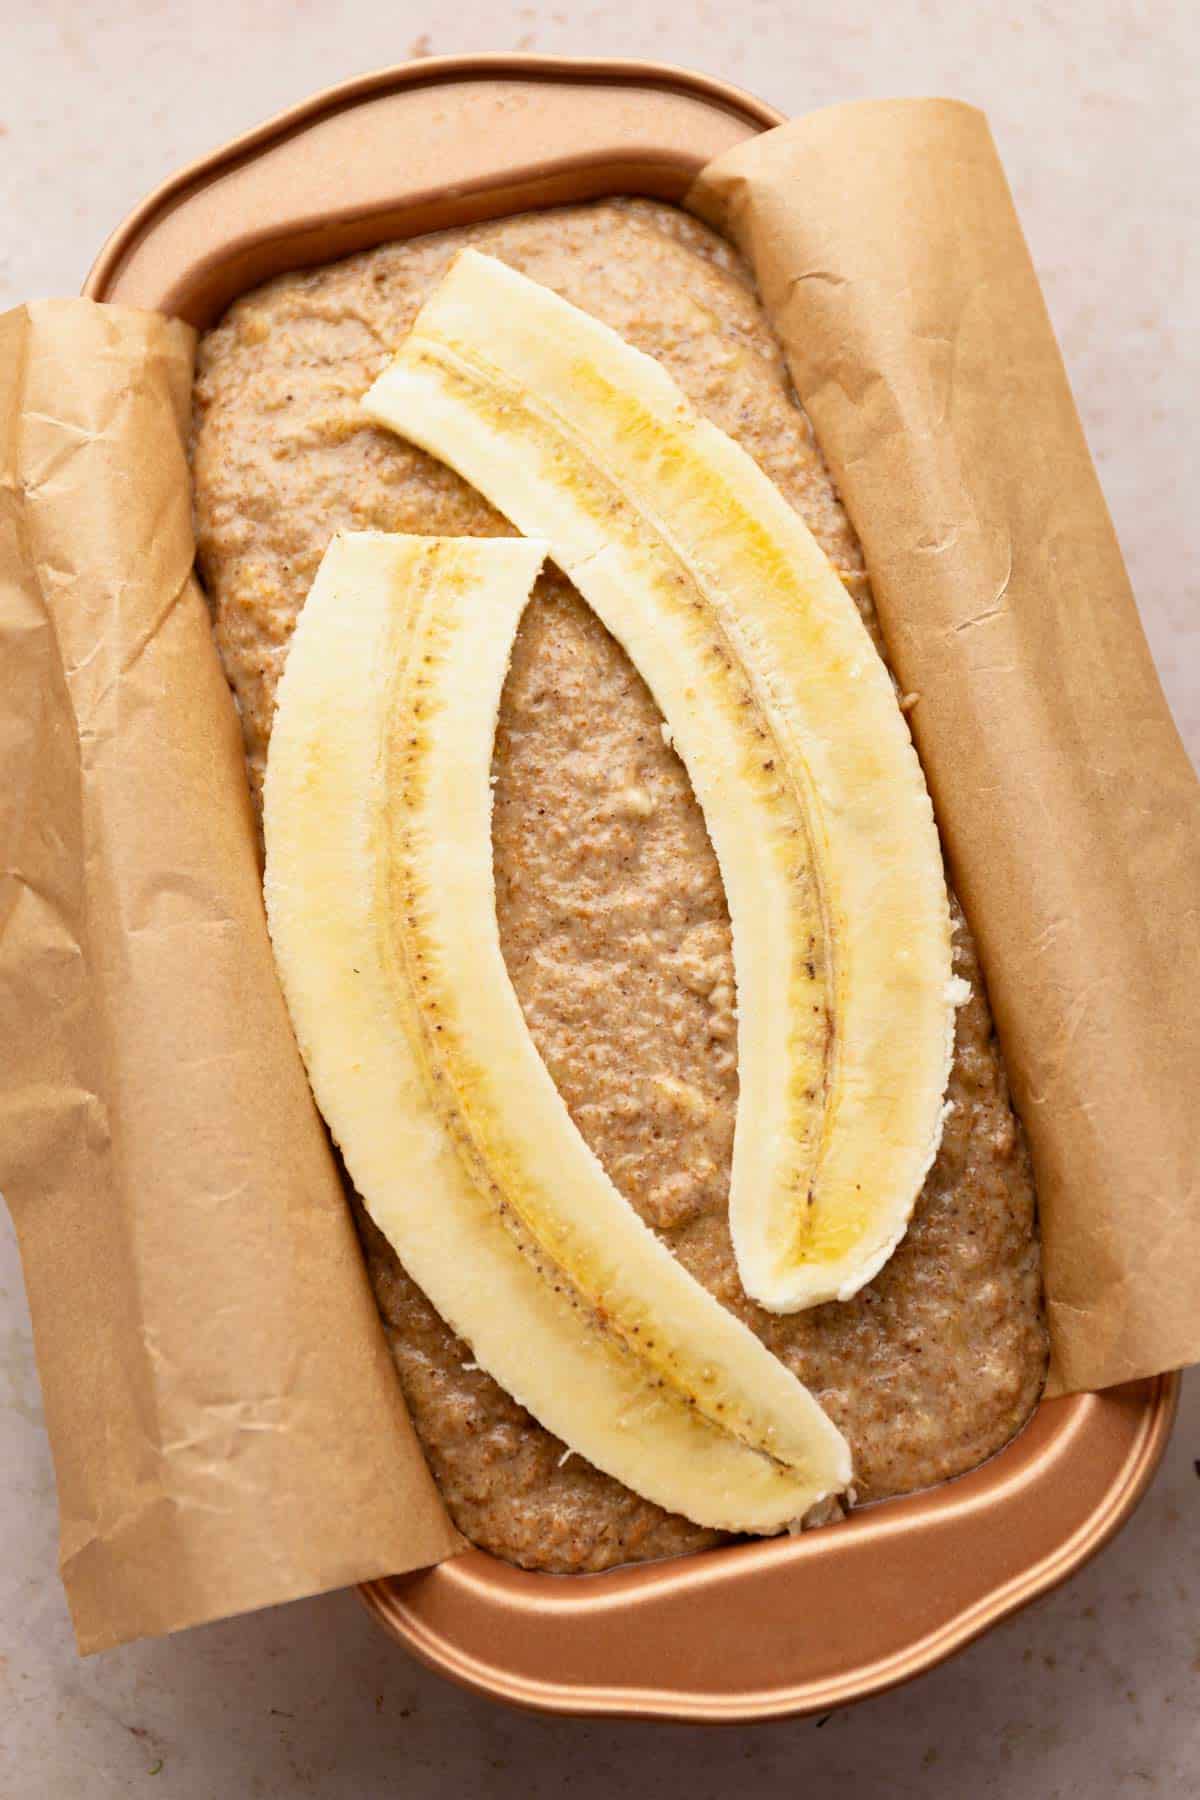 2 slices of banana on top of banana bread batter.